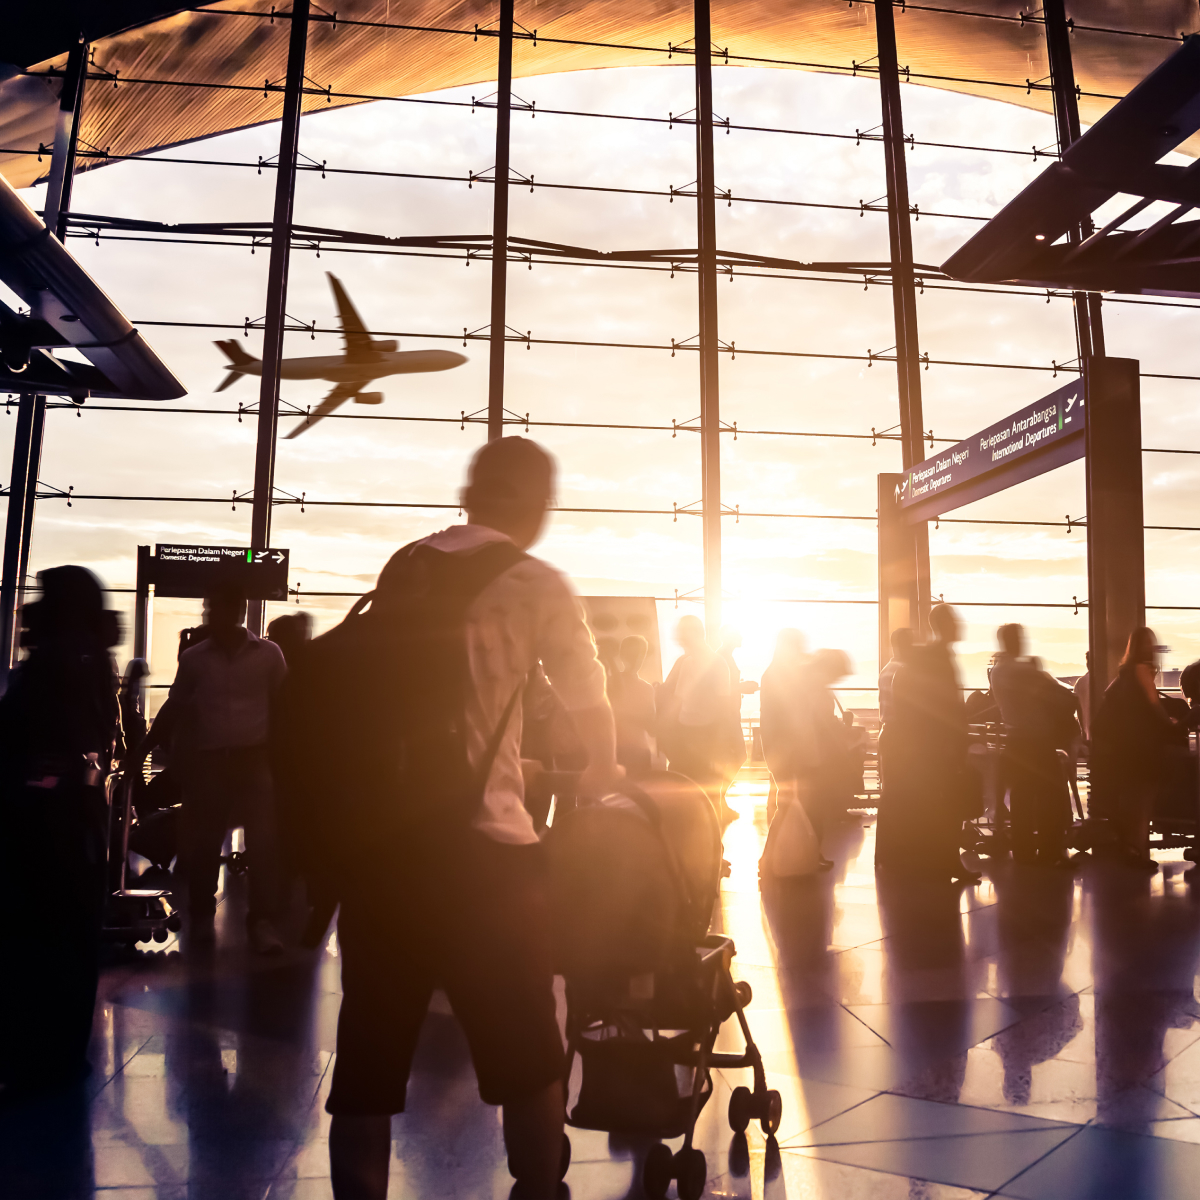 


                              

The Biggest Benefits of Airport Analytics
